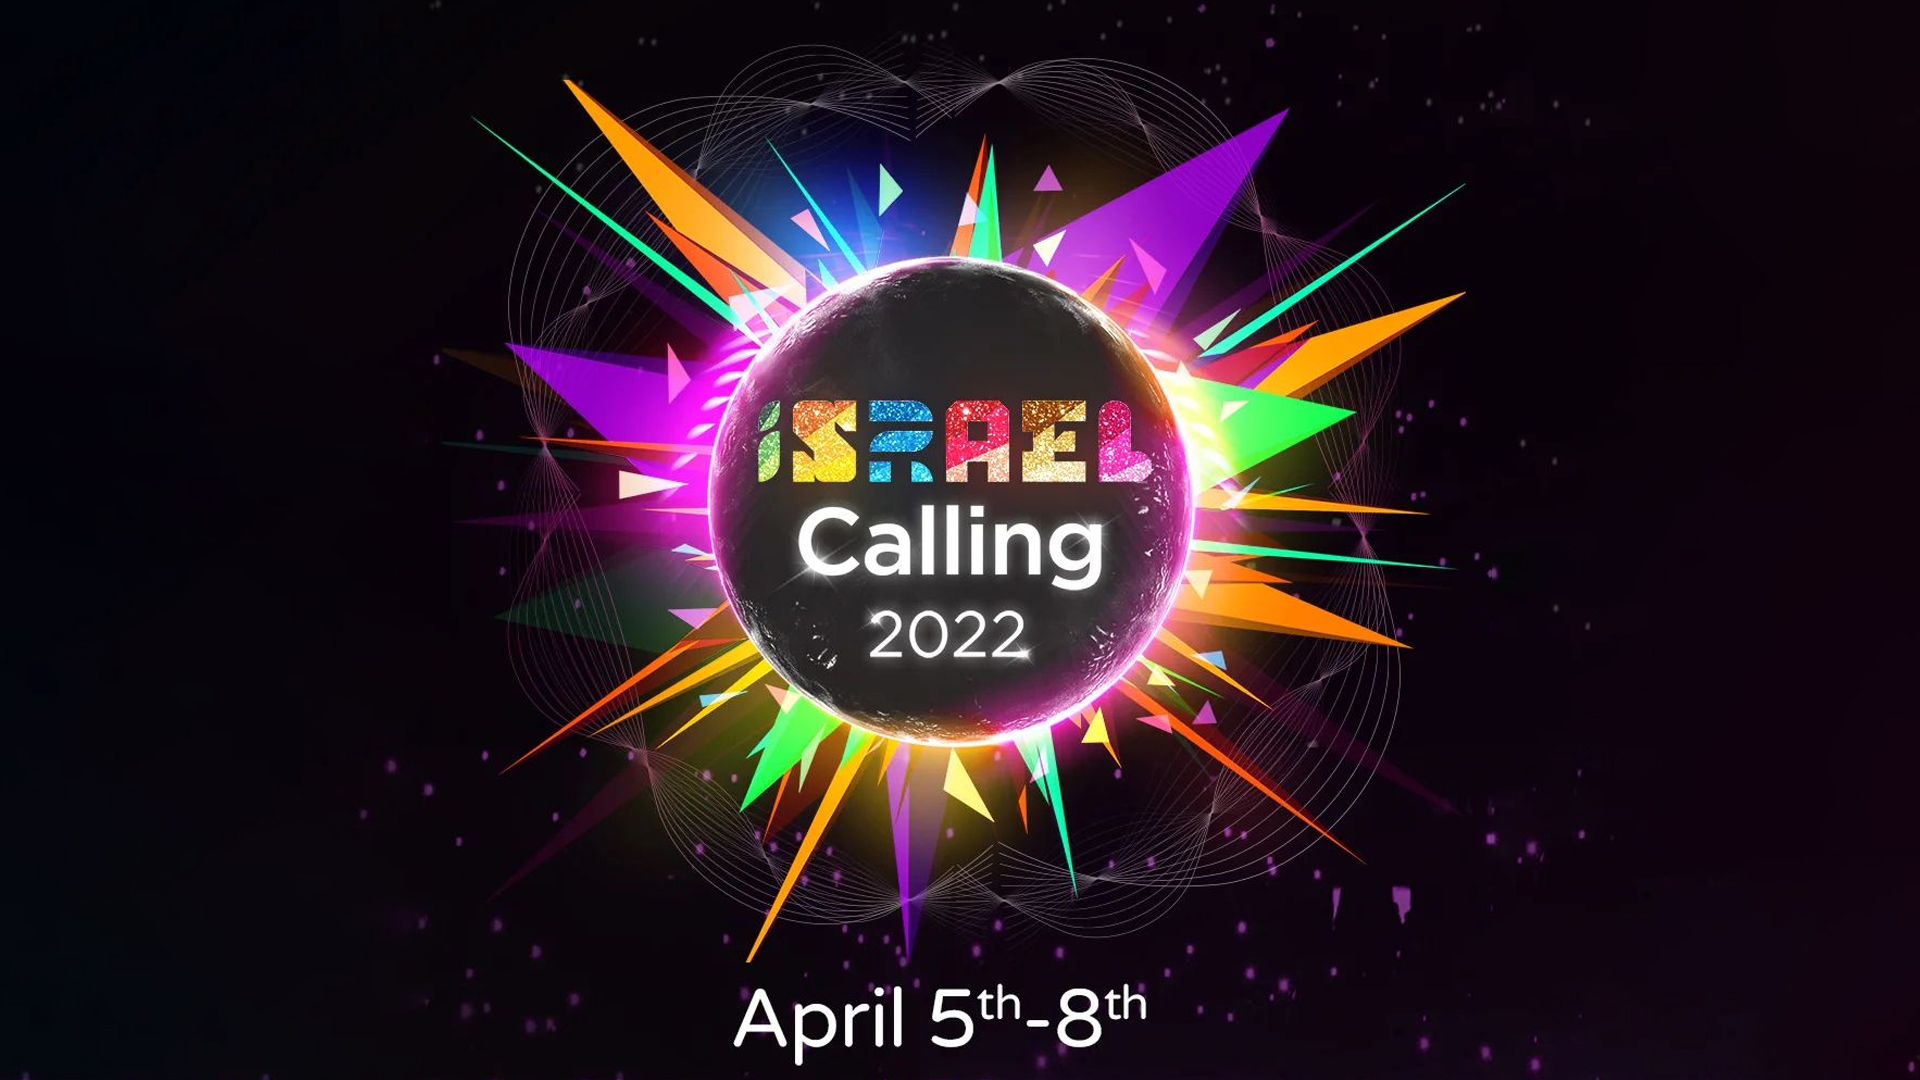 Israel Calling brings back the Eurovision spirit to Israel